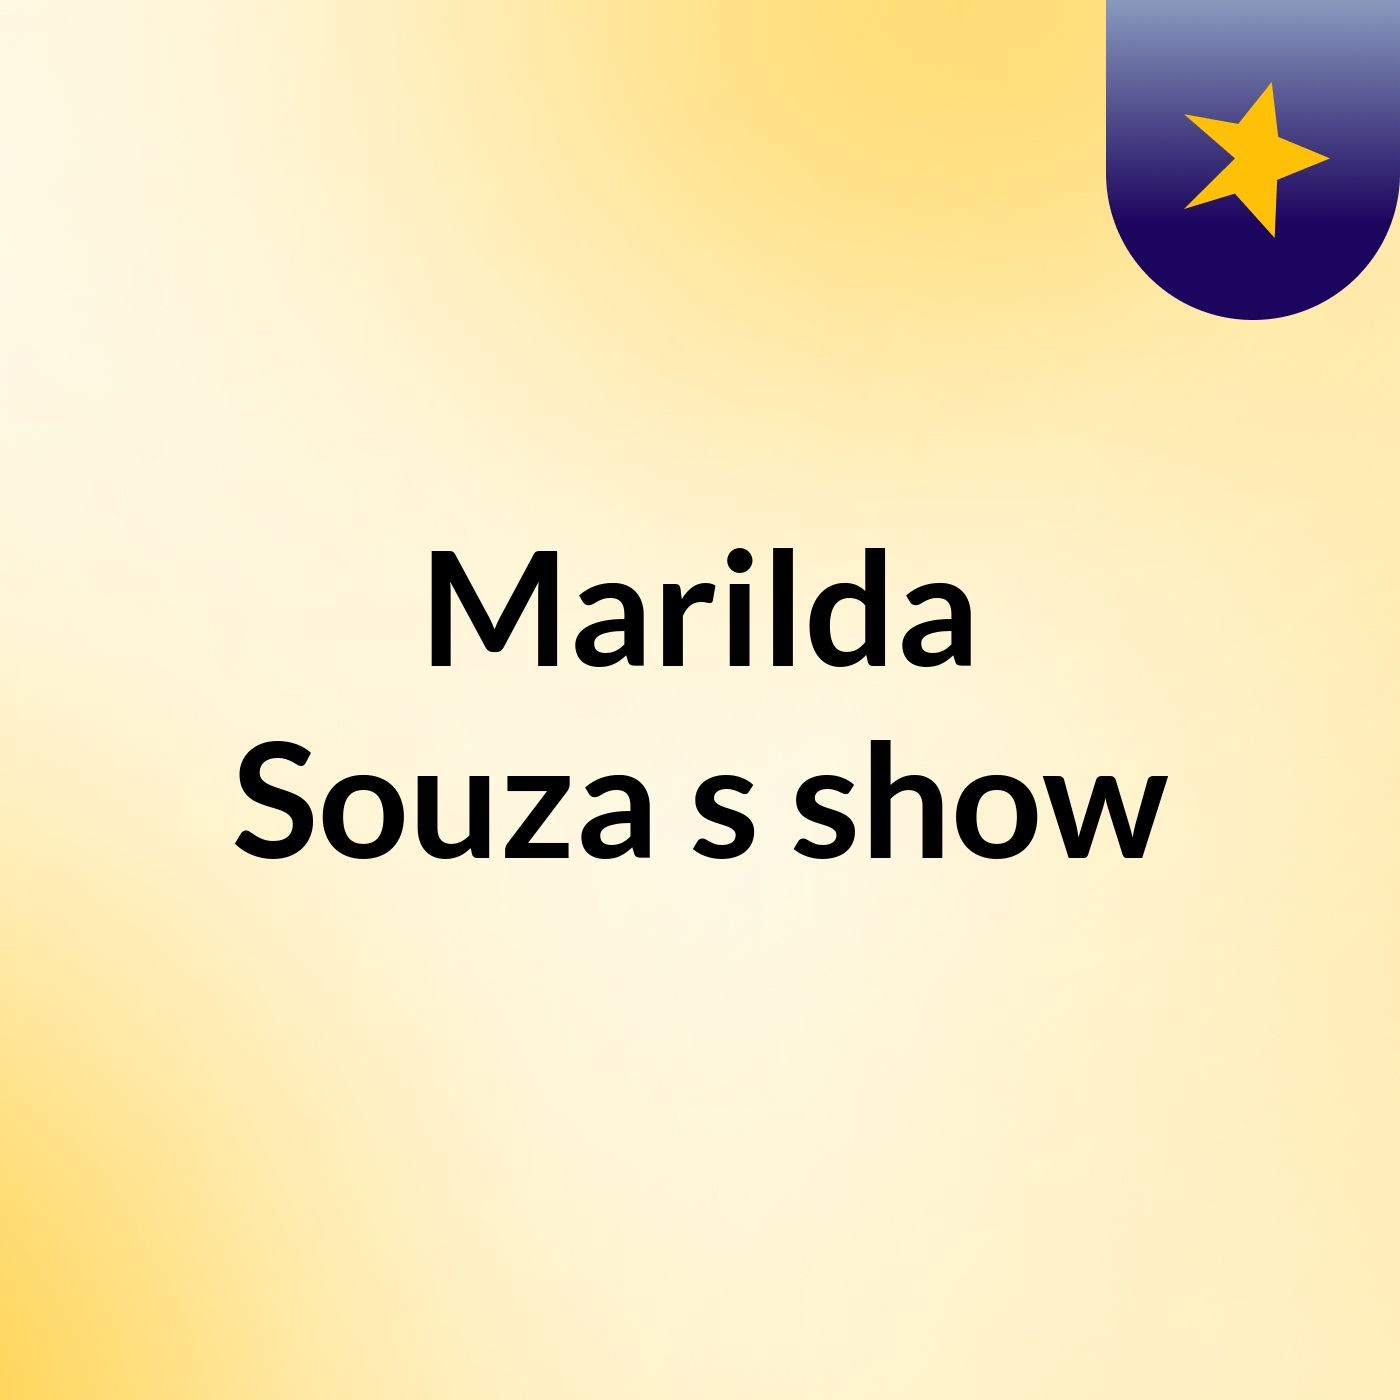 Marilda Souza's show